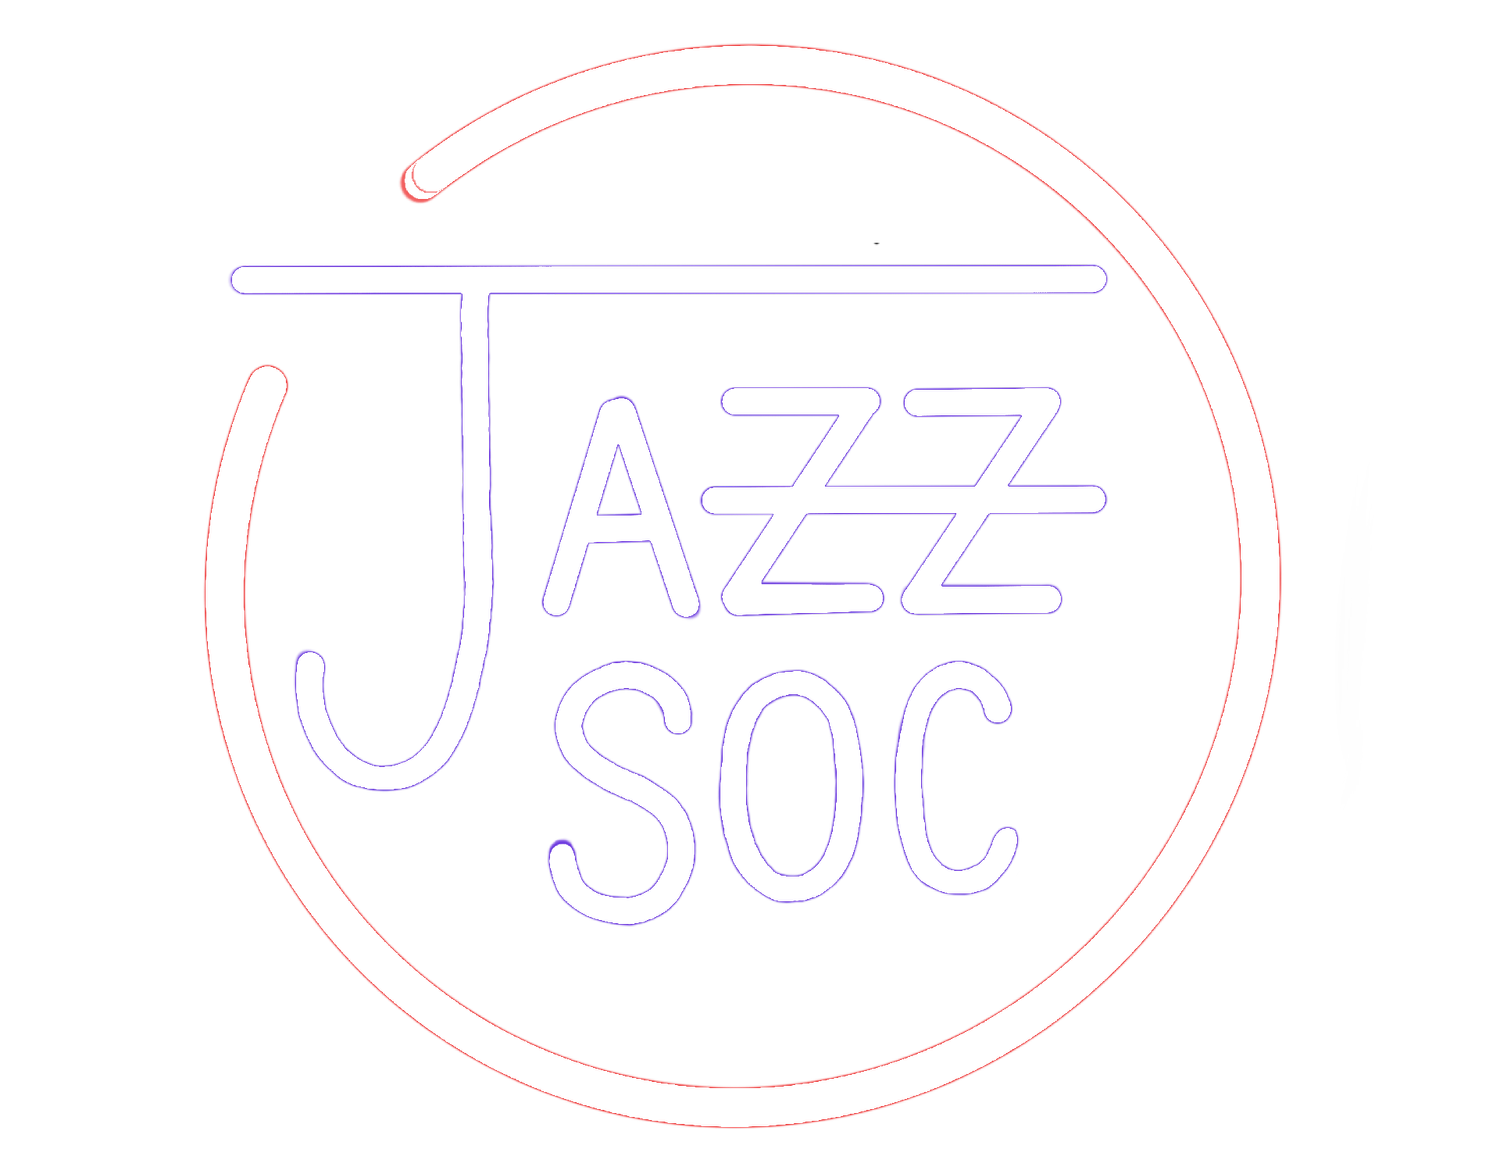 Cambridge University Jazz Society